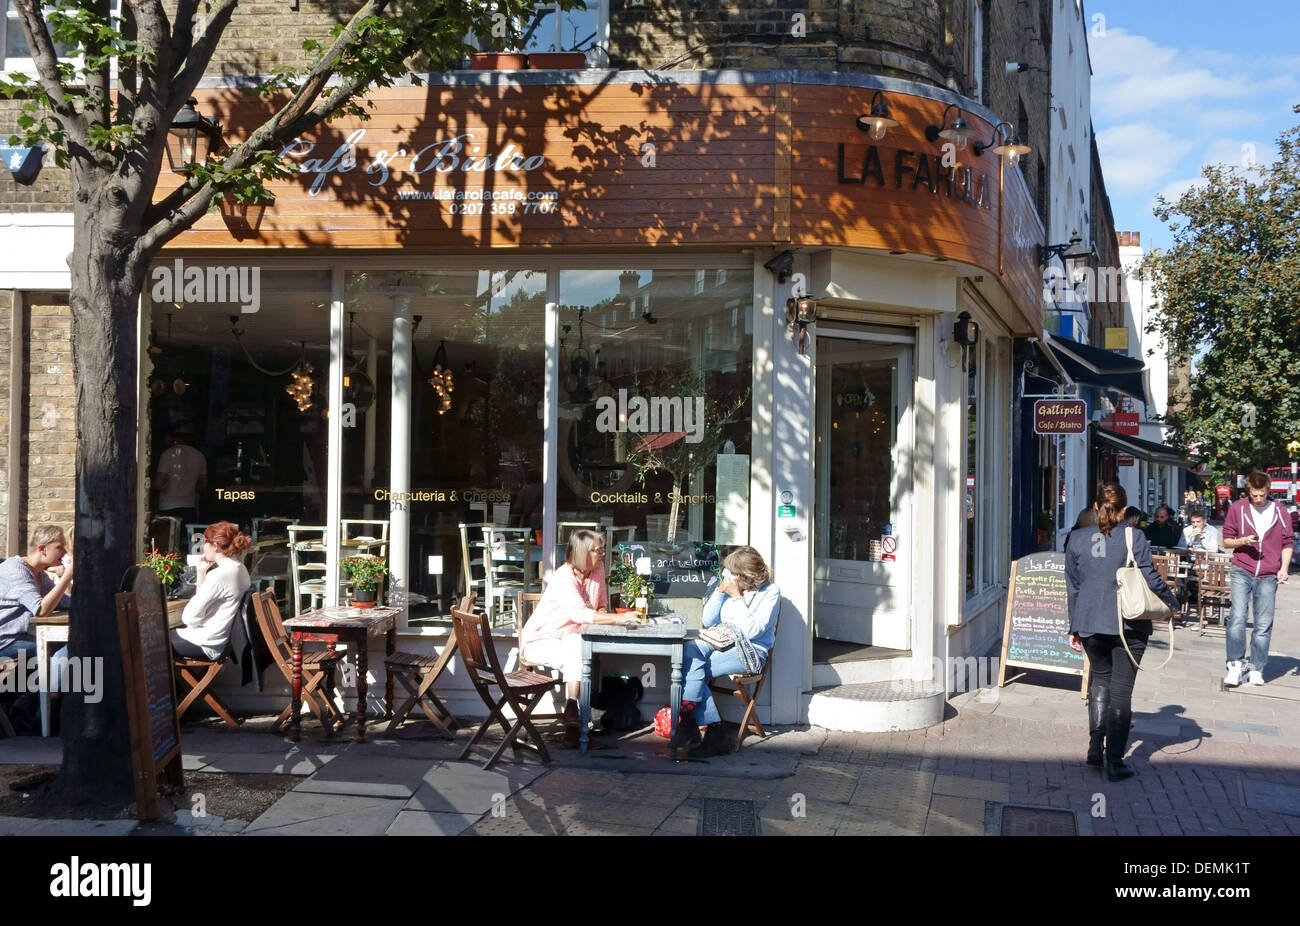 La Farola spanischen Restaurant & Tapas Bar, Upper Street, Islington, London Stockfoto